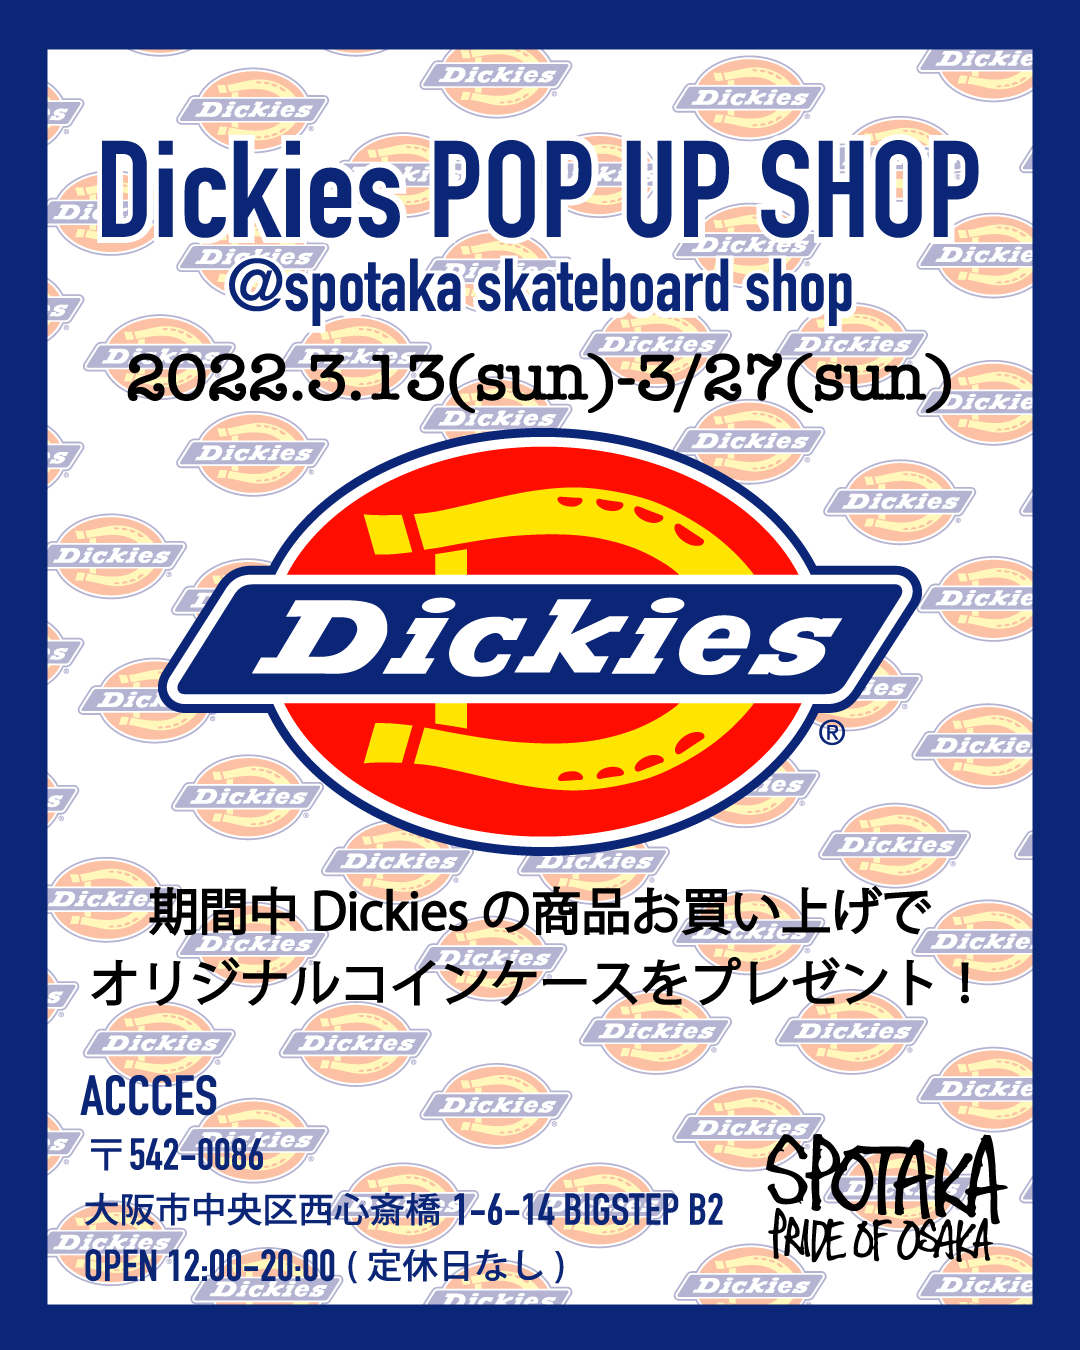 Dickies Pop-Up Shop Open☆ 3/13(sun)〜3/27(sun)